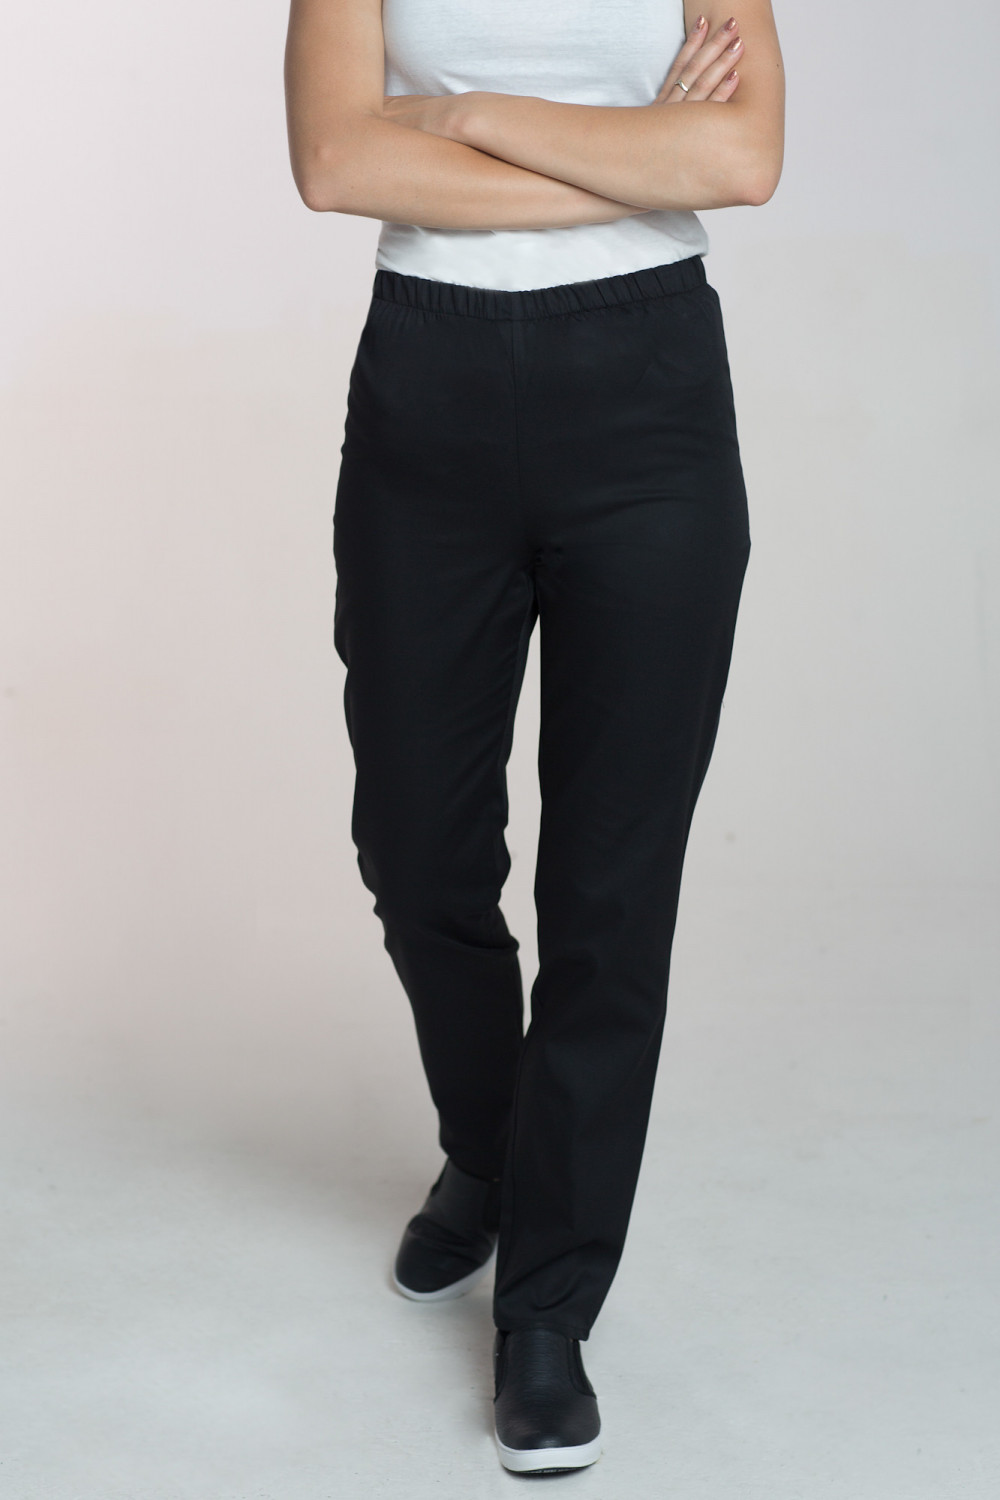 M-086 Spodnie damskie medyczne spodnie do pracy kolor czarny